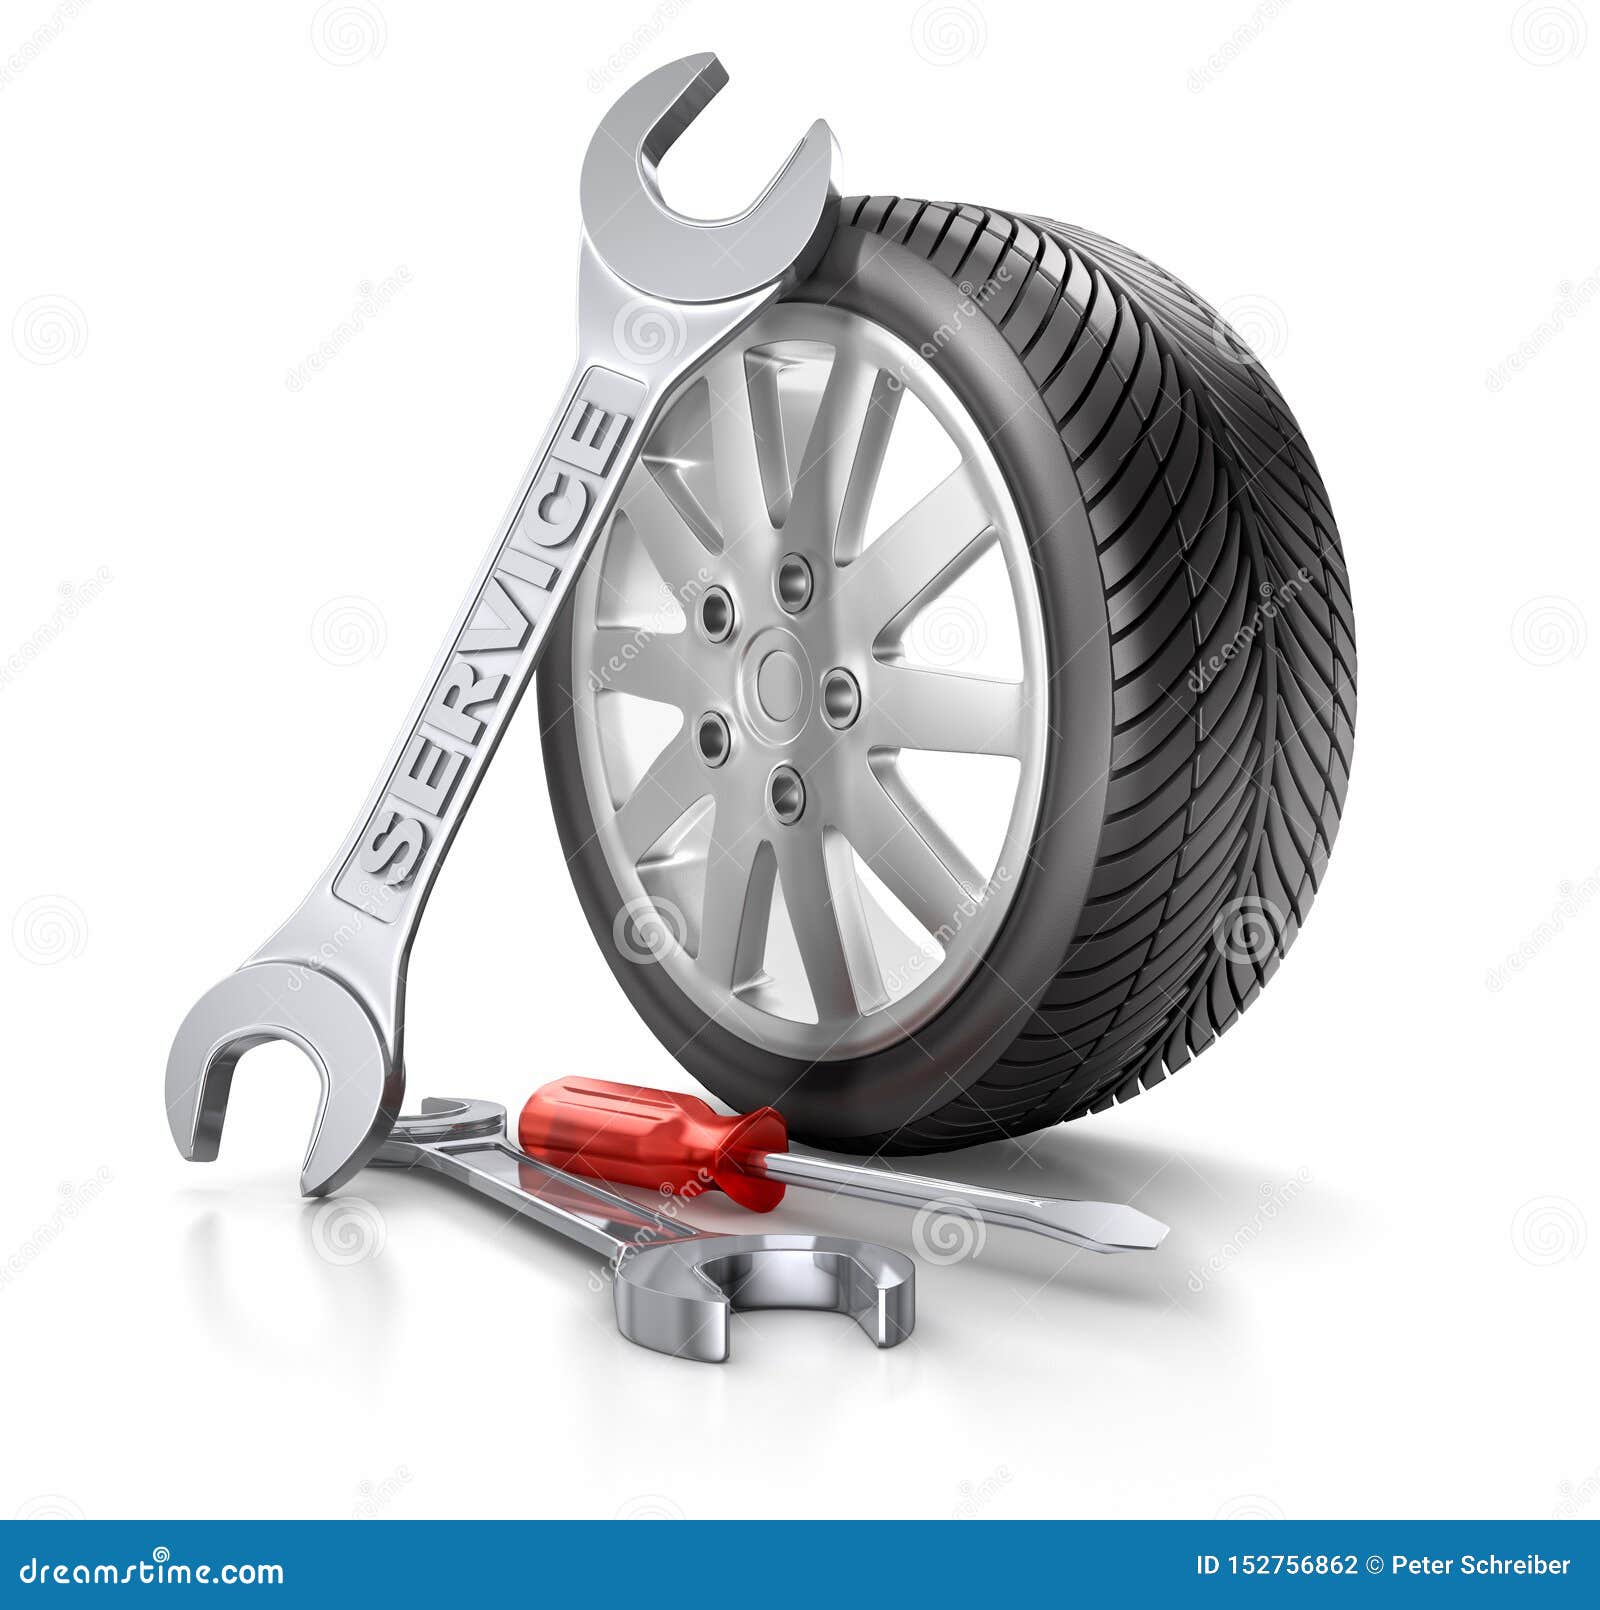 Auto Mechanic S Tools on Grey Stone Table Stock Illustration - Illustration  of master, engineering: 272914334